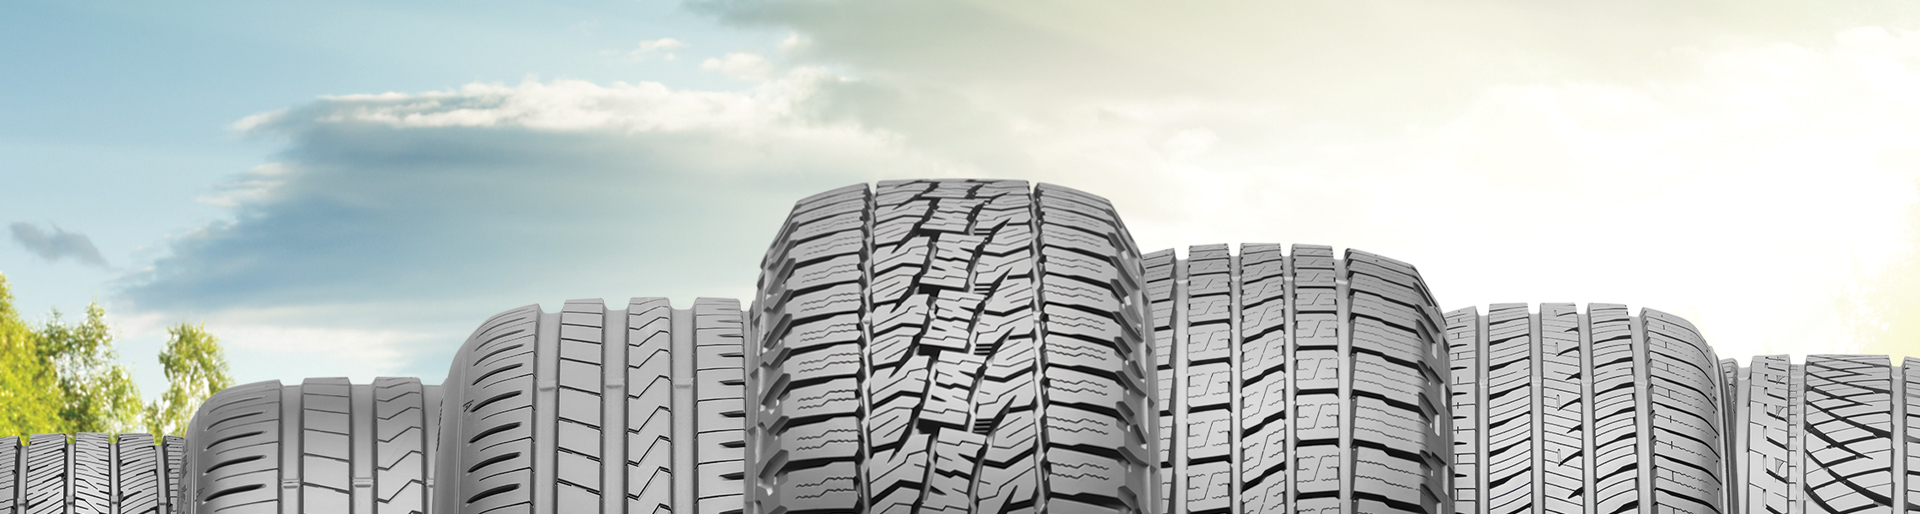 Falken Tires Consumer Rebates